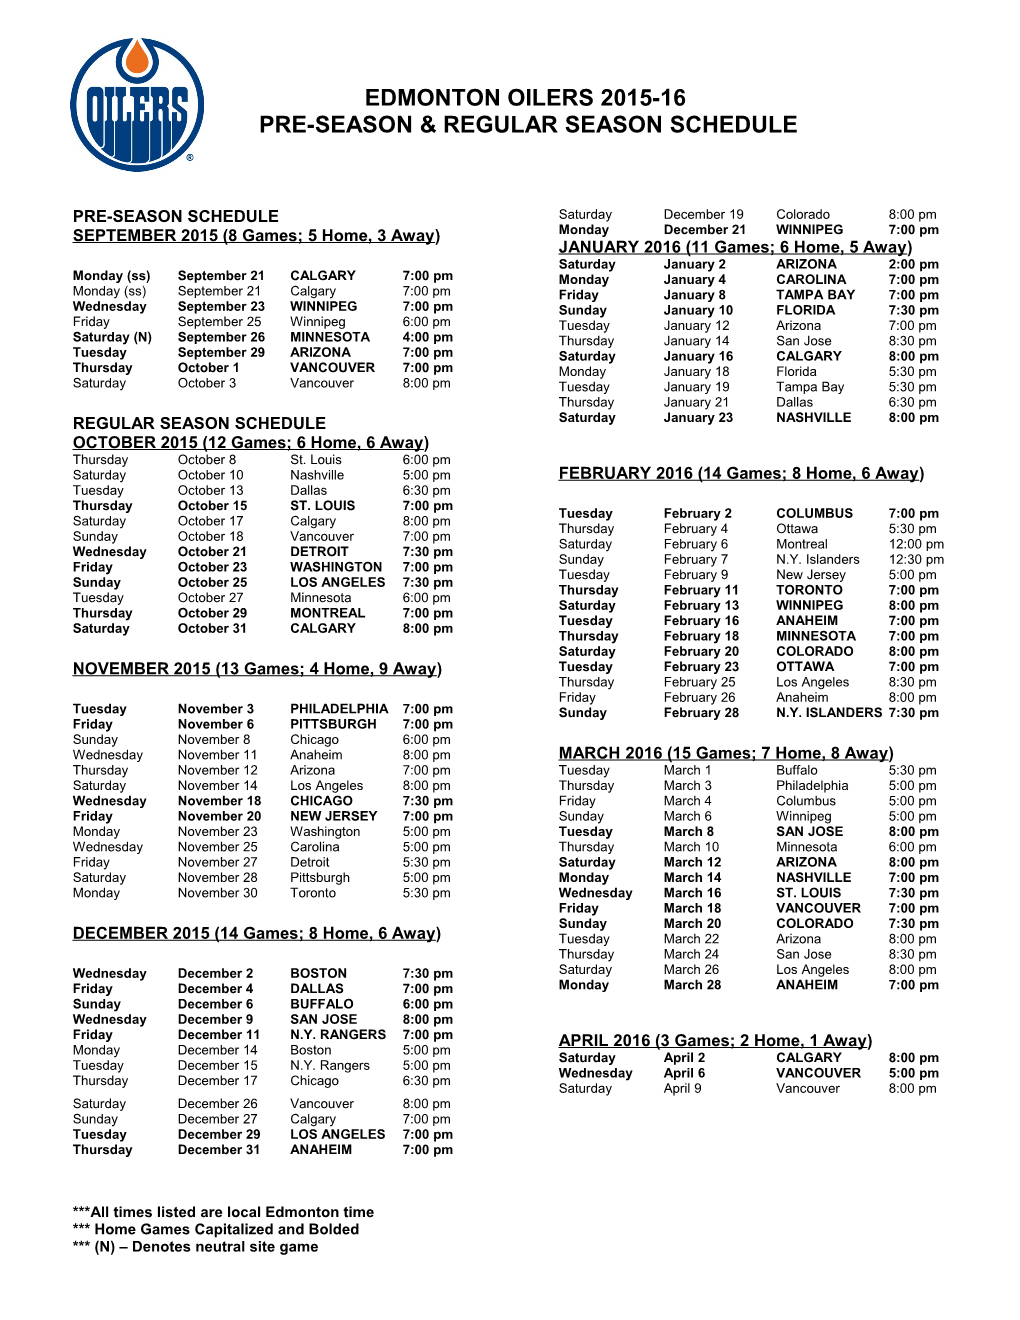 Edmonton Oilers 2001-02 Nhl Schedule